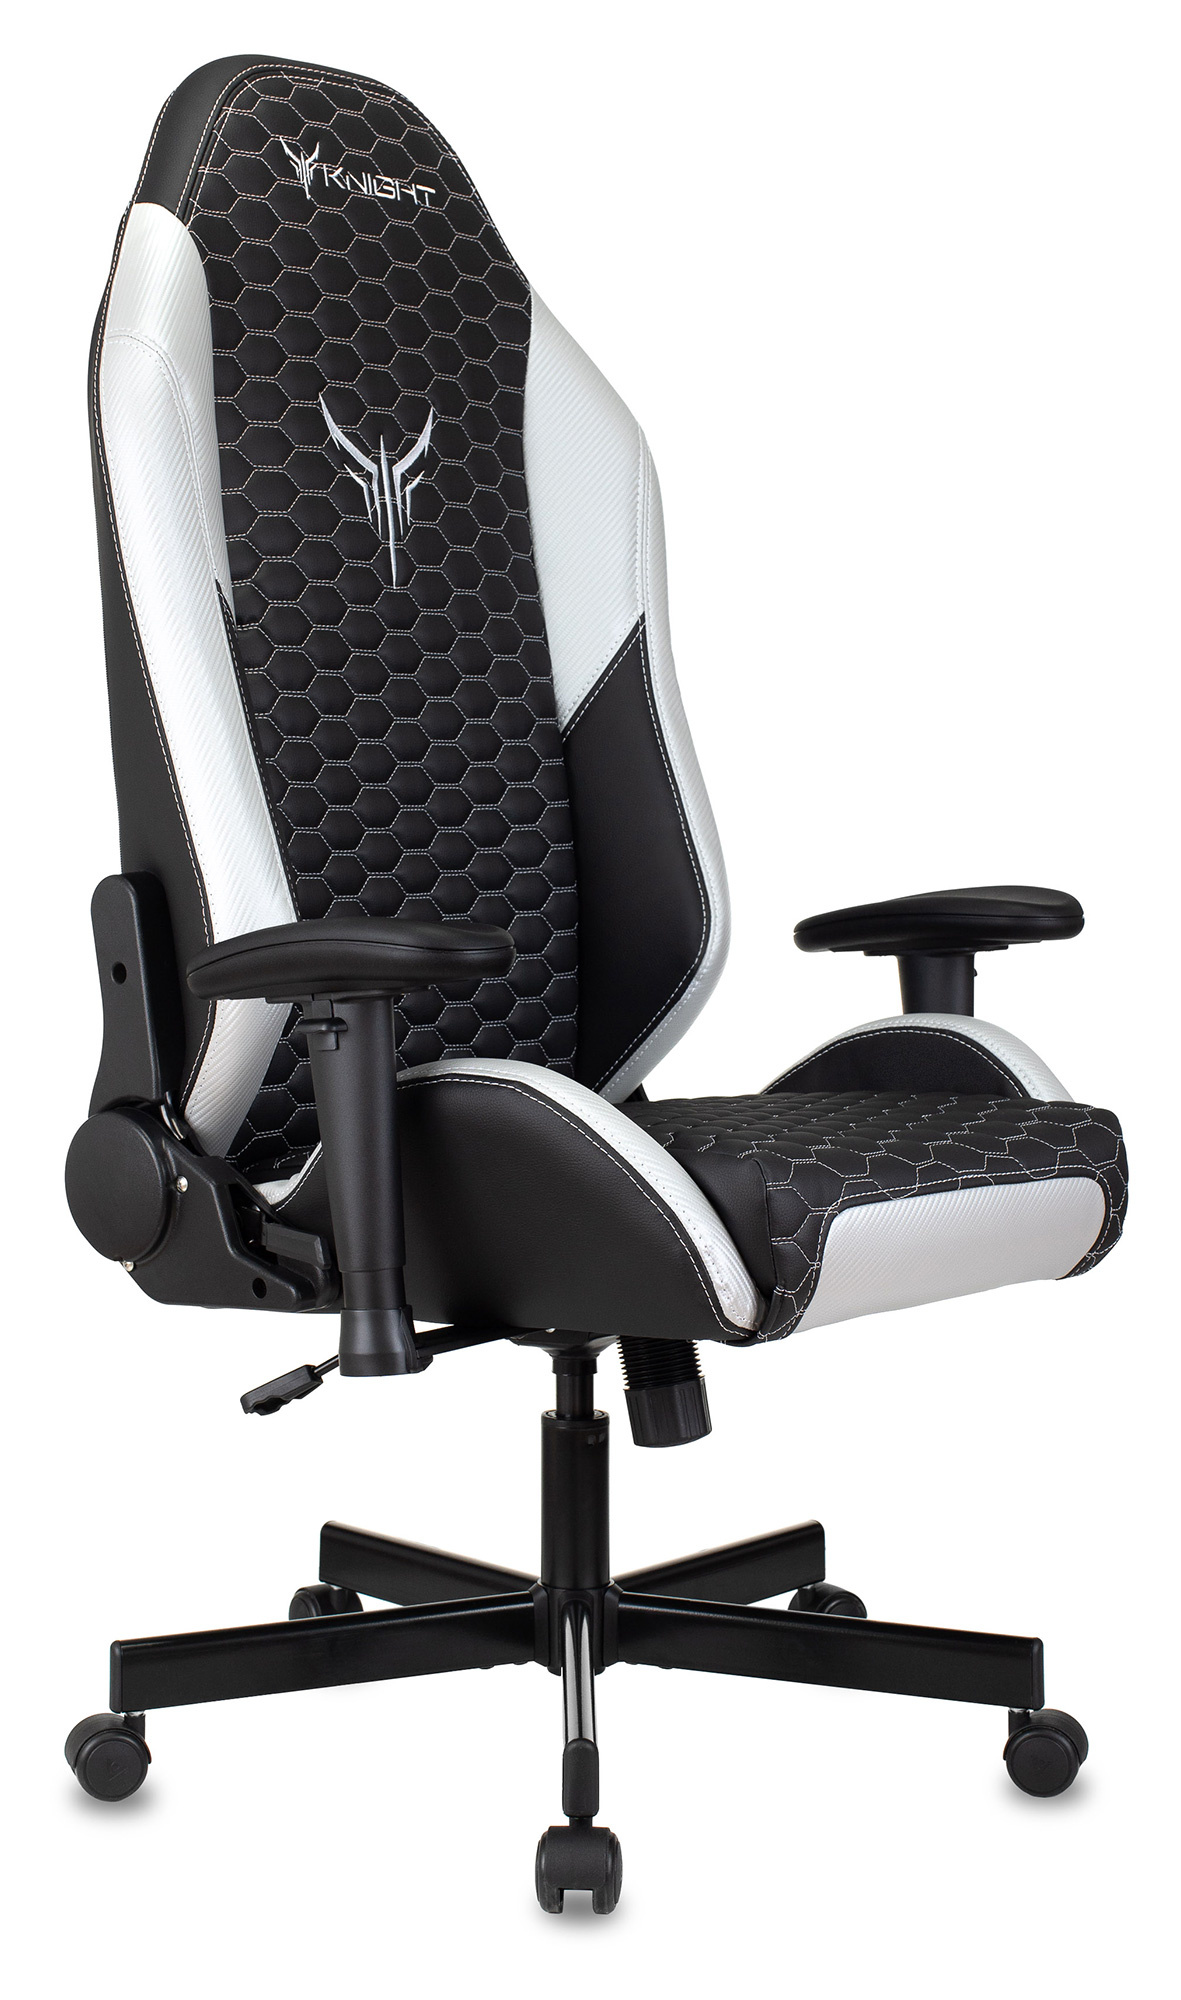 Кресло игровое Knight Neon, обивка: эко.кожа, цвет: черный/серебряный, рисунок соты (KNIGHT NEON SILVER) от магазина Buro.store